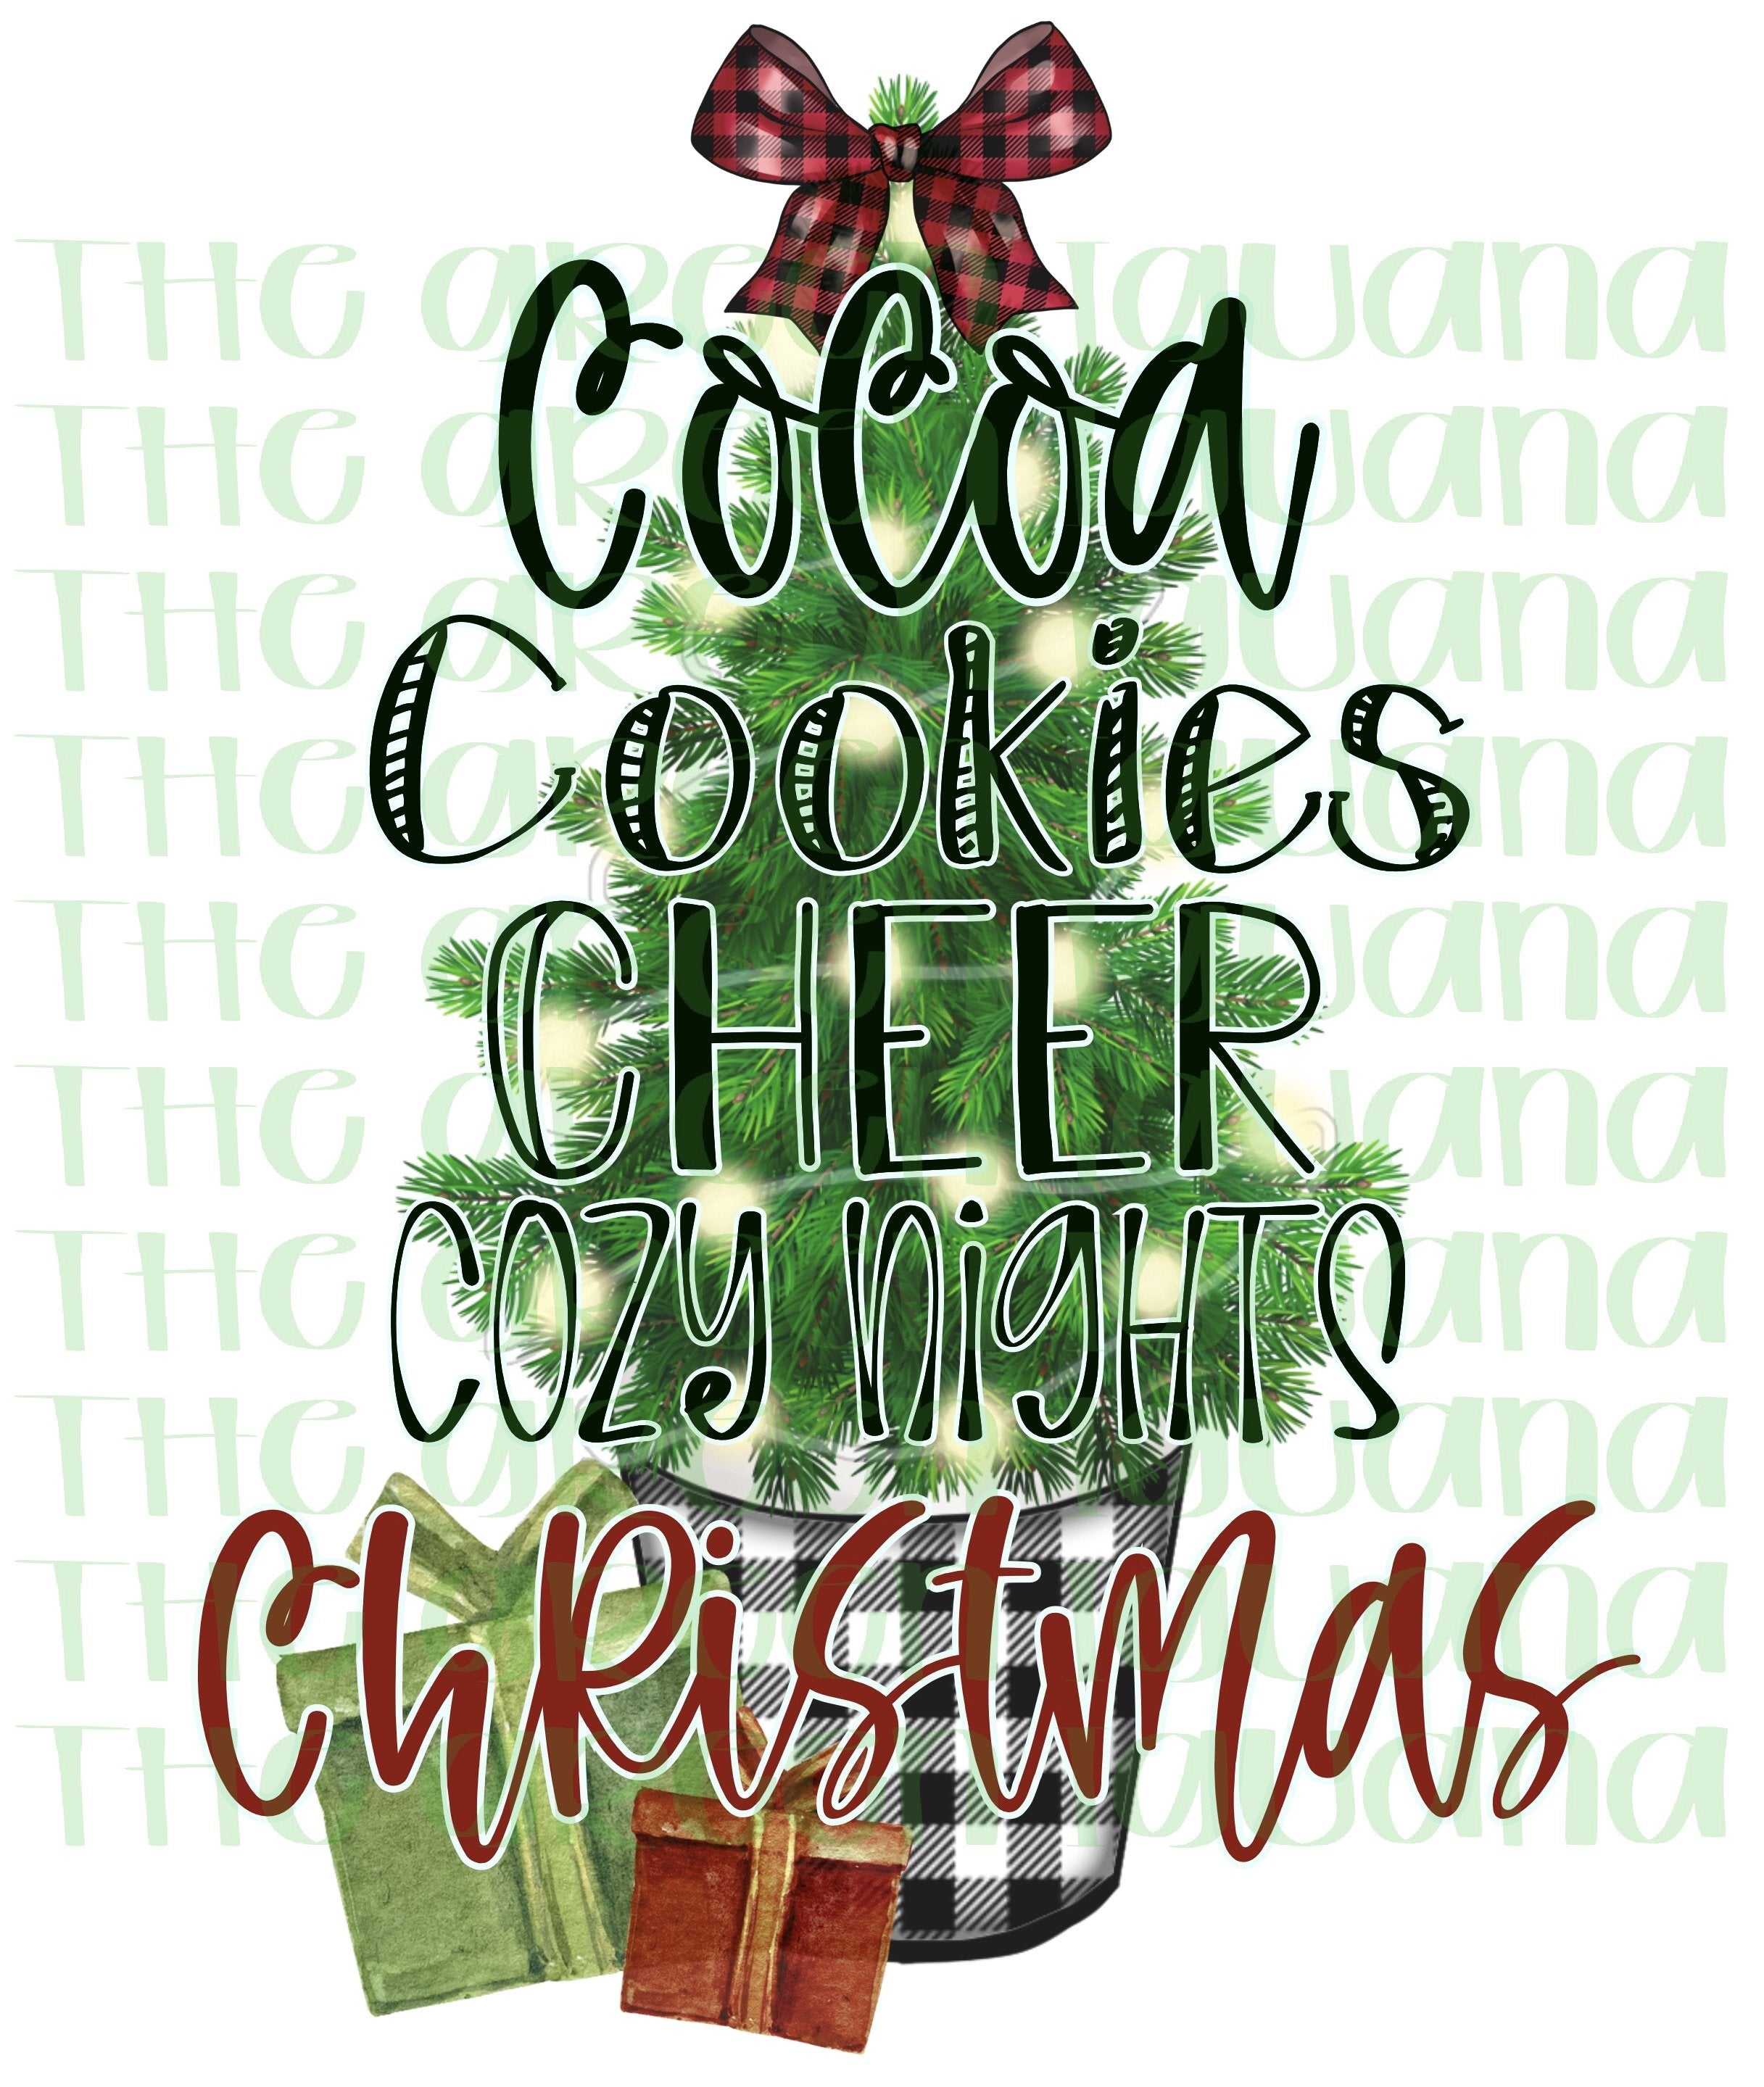 Cocoa, cookies, cheer, cozy nights, Christmas